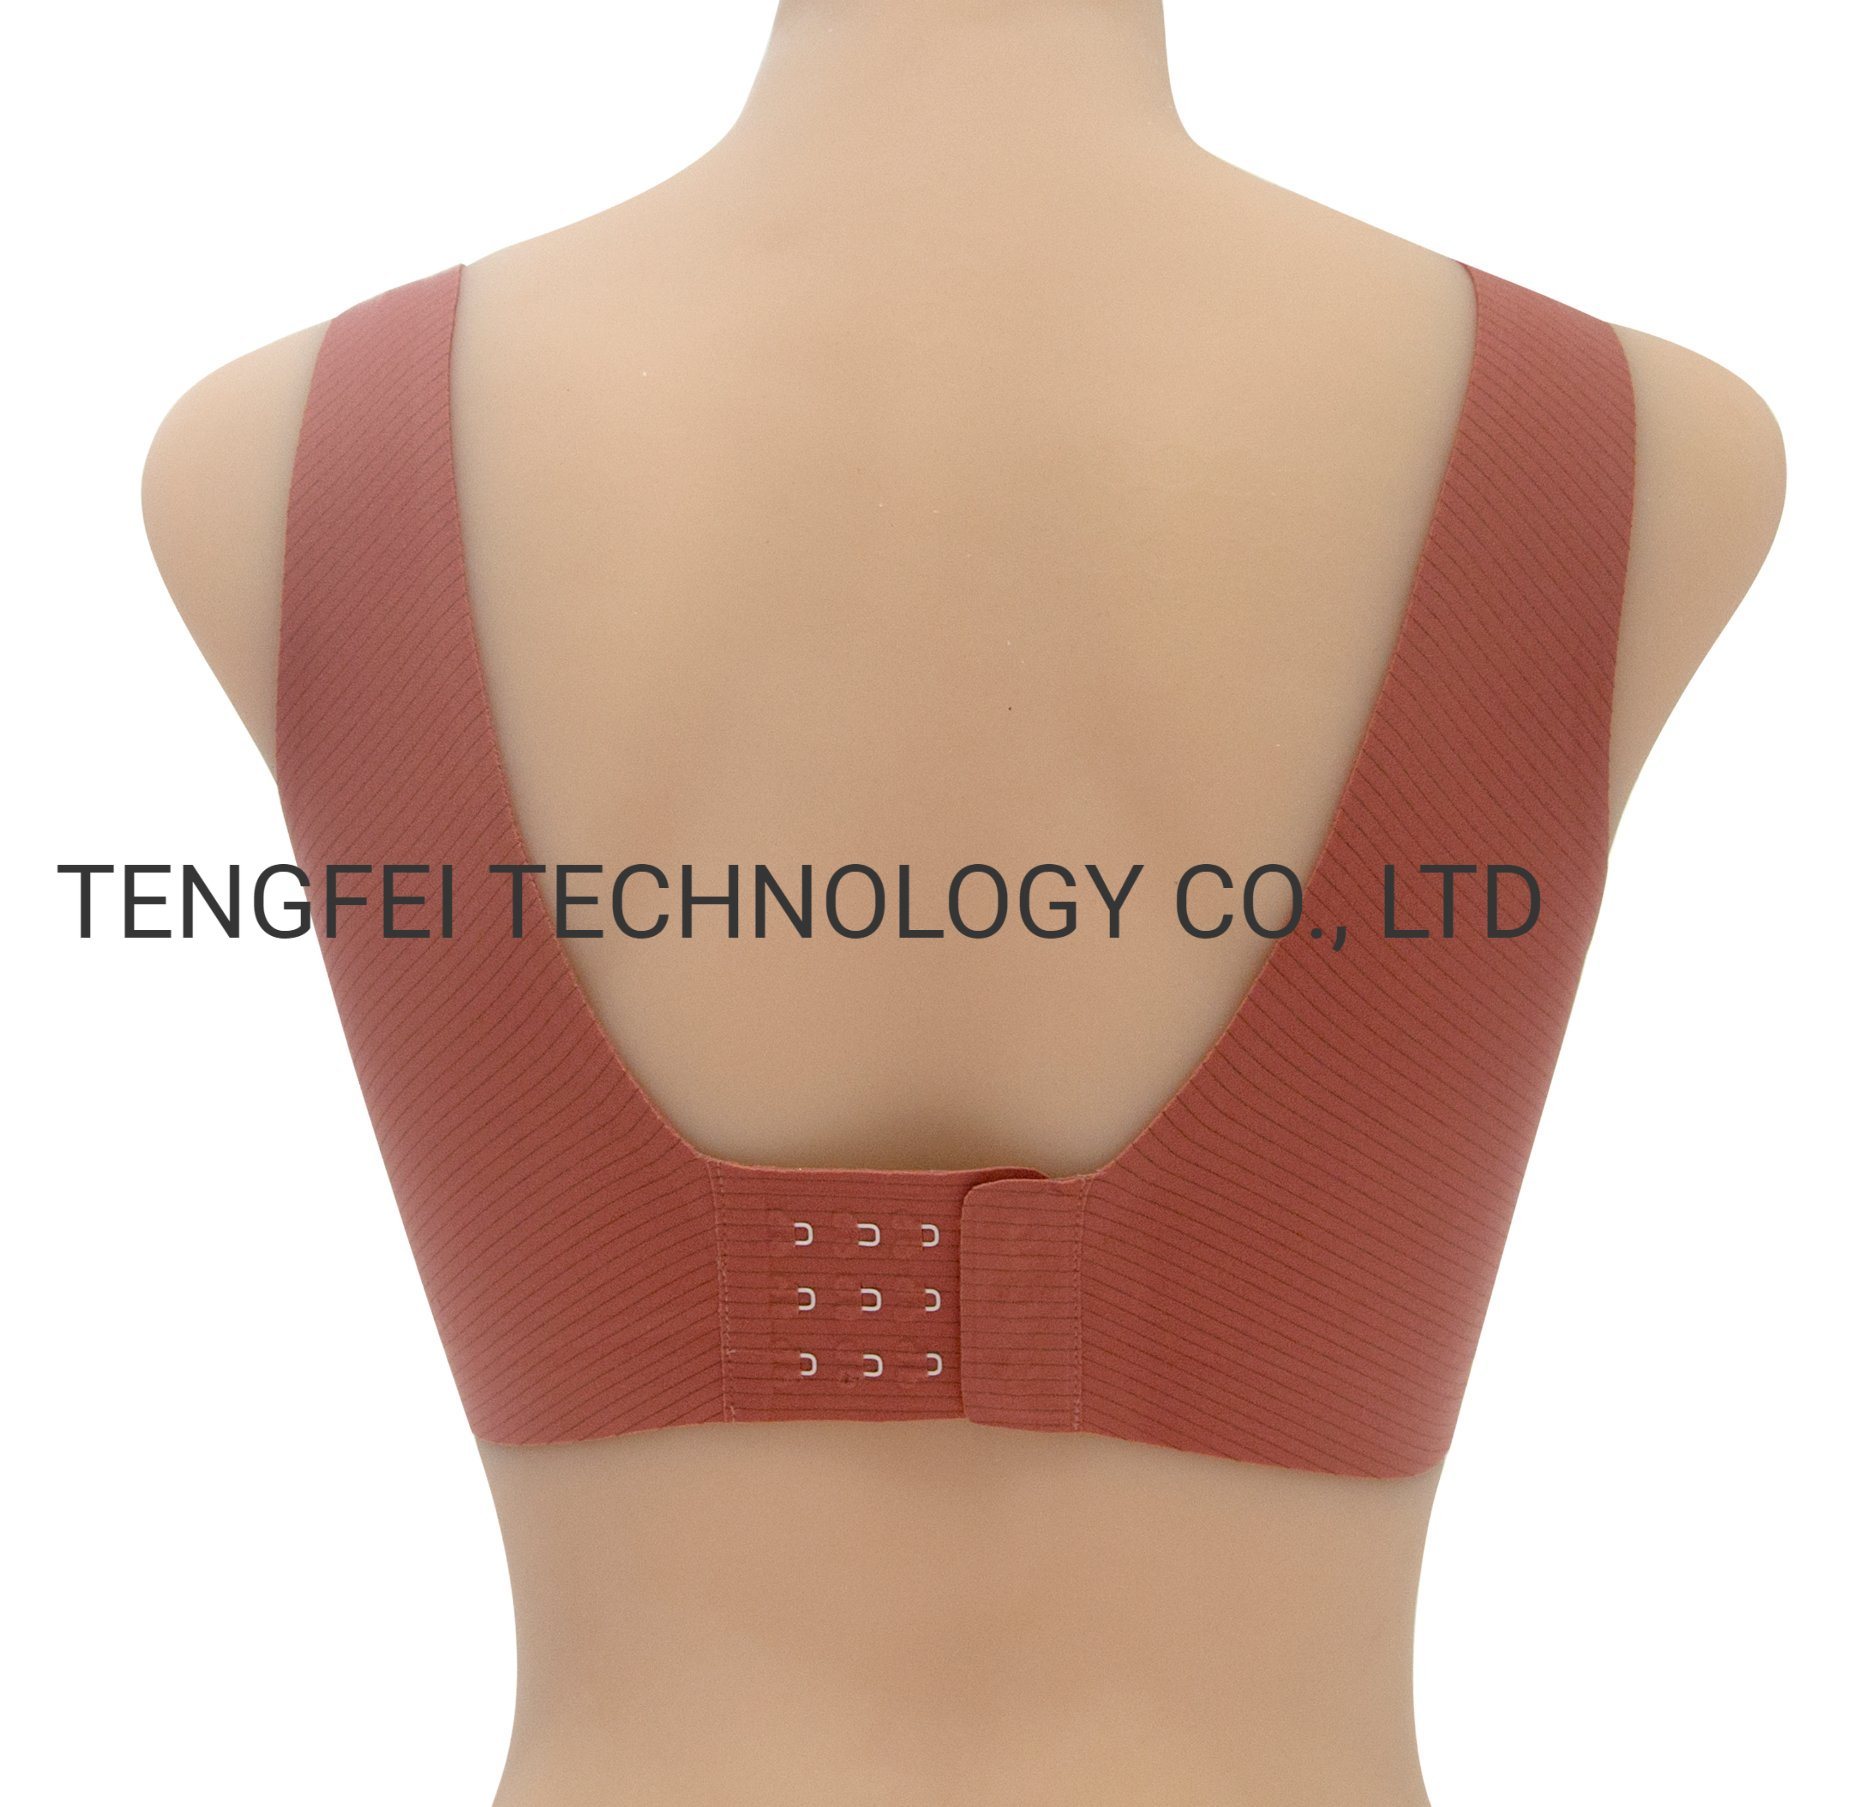 Using Tengfei Technology's Senselast® Printing Technology To Revolutionize  The Field Of Shapewear